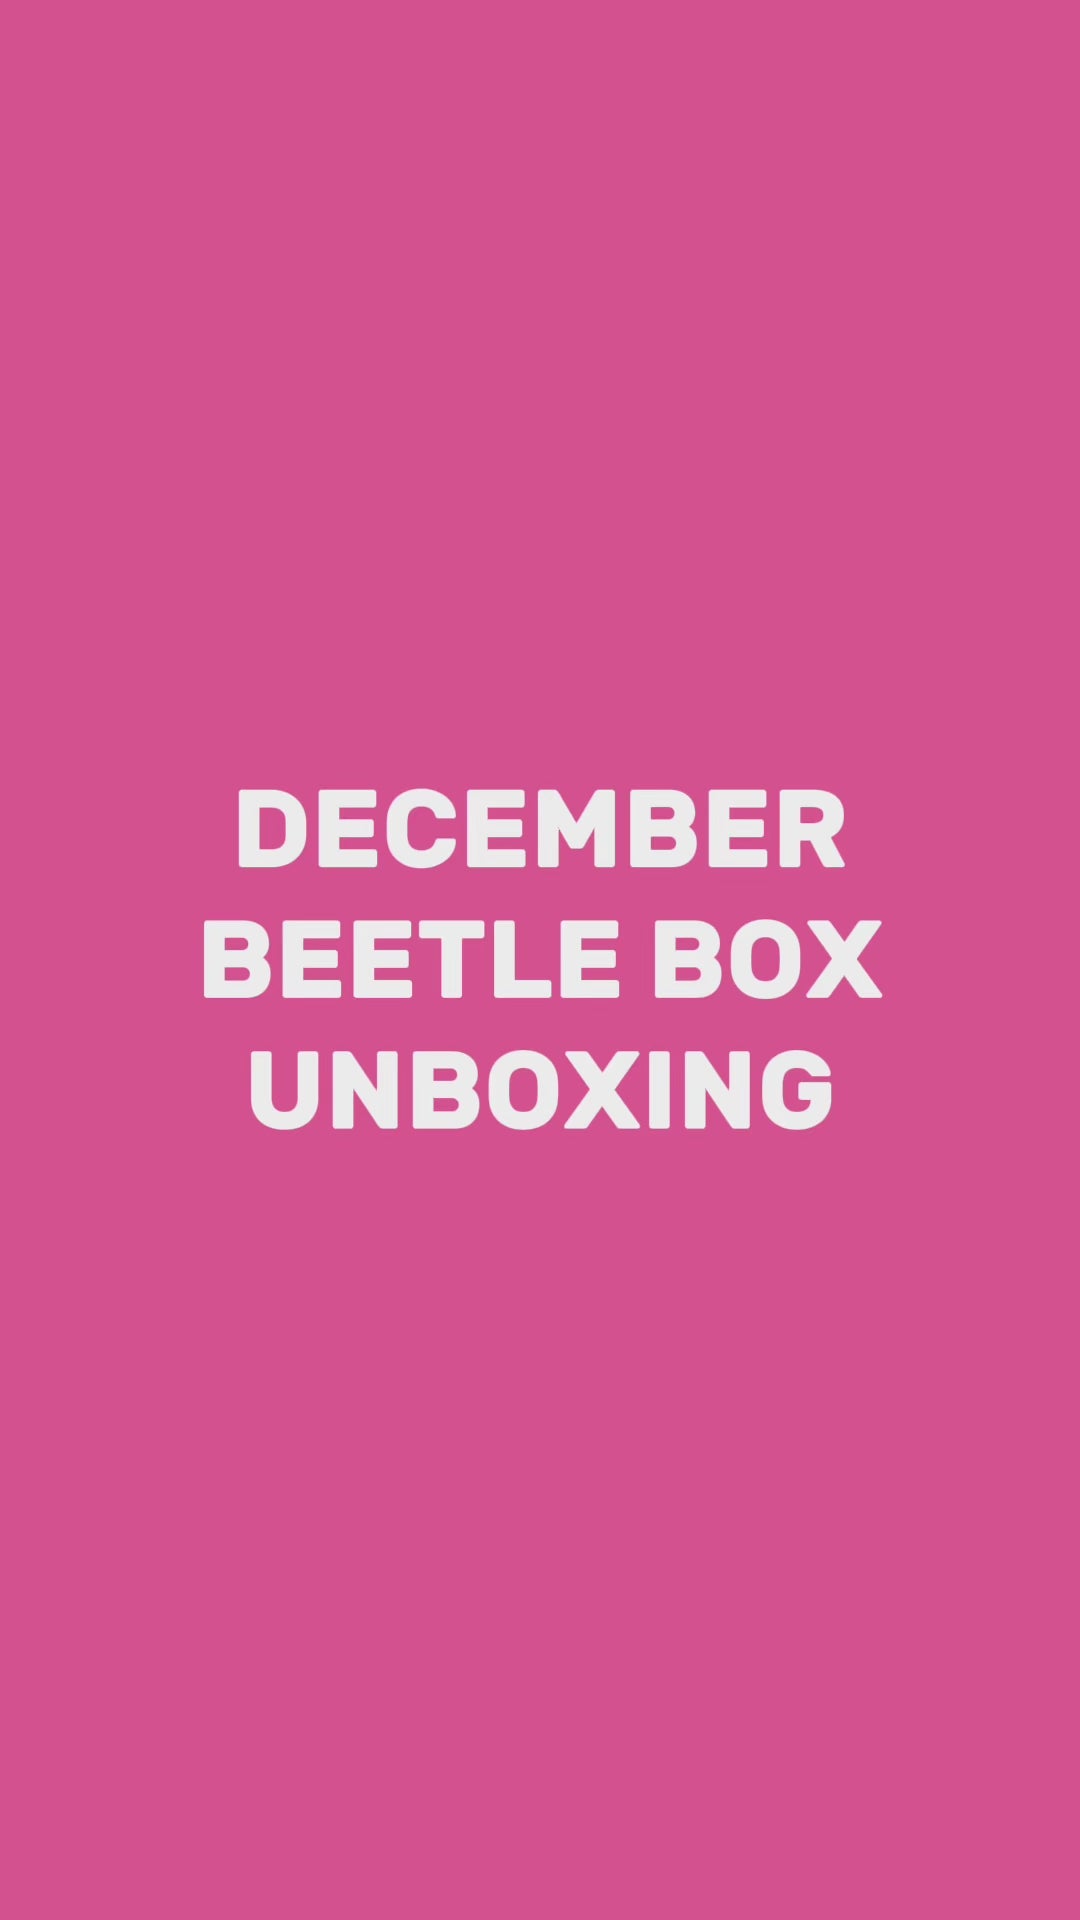 Beetle Box Subscription